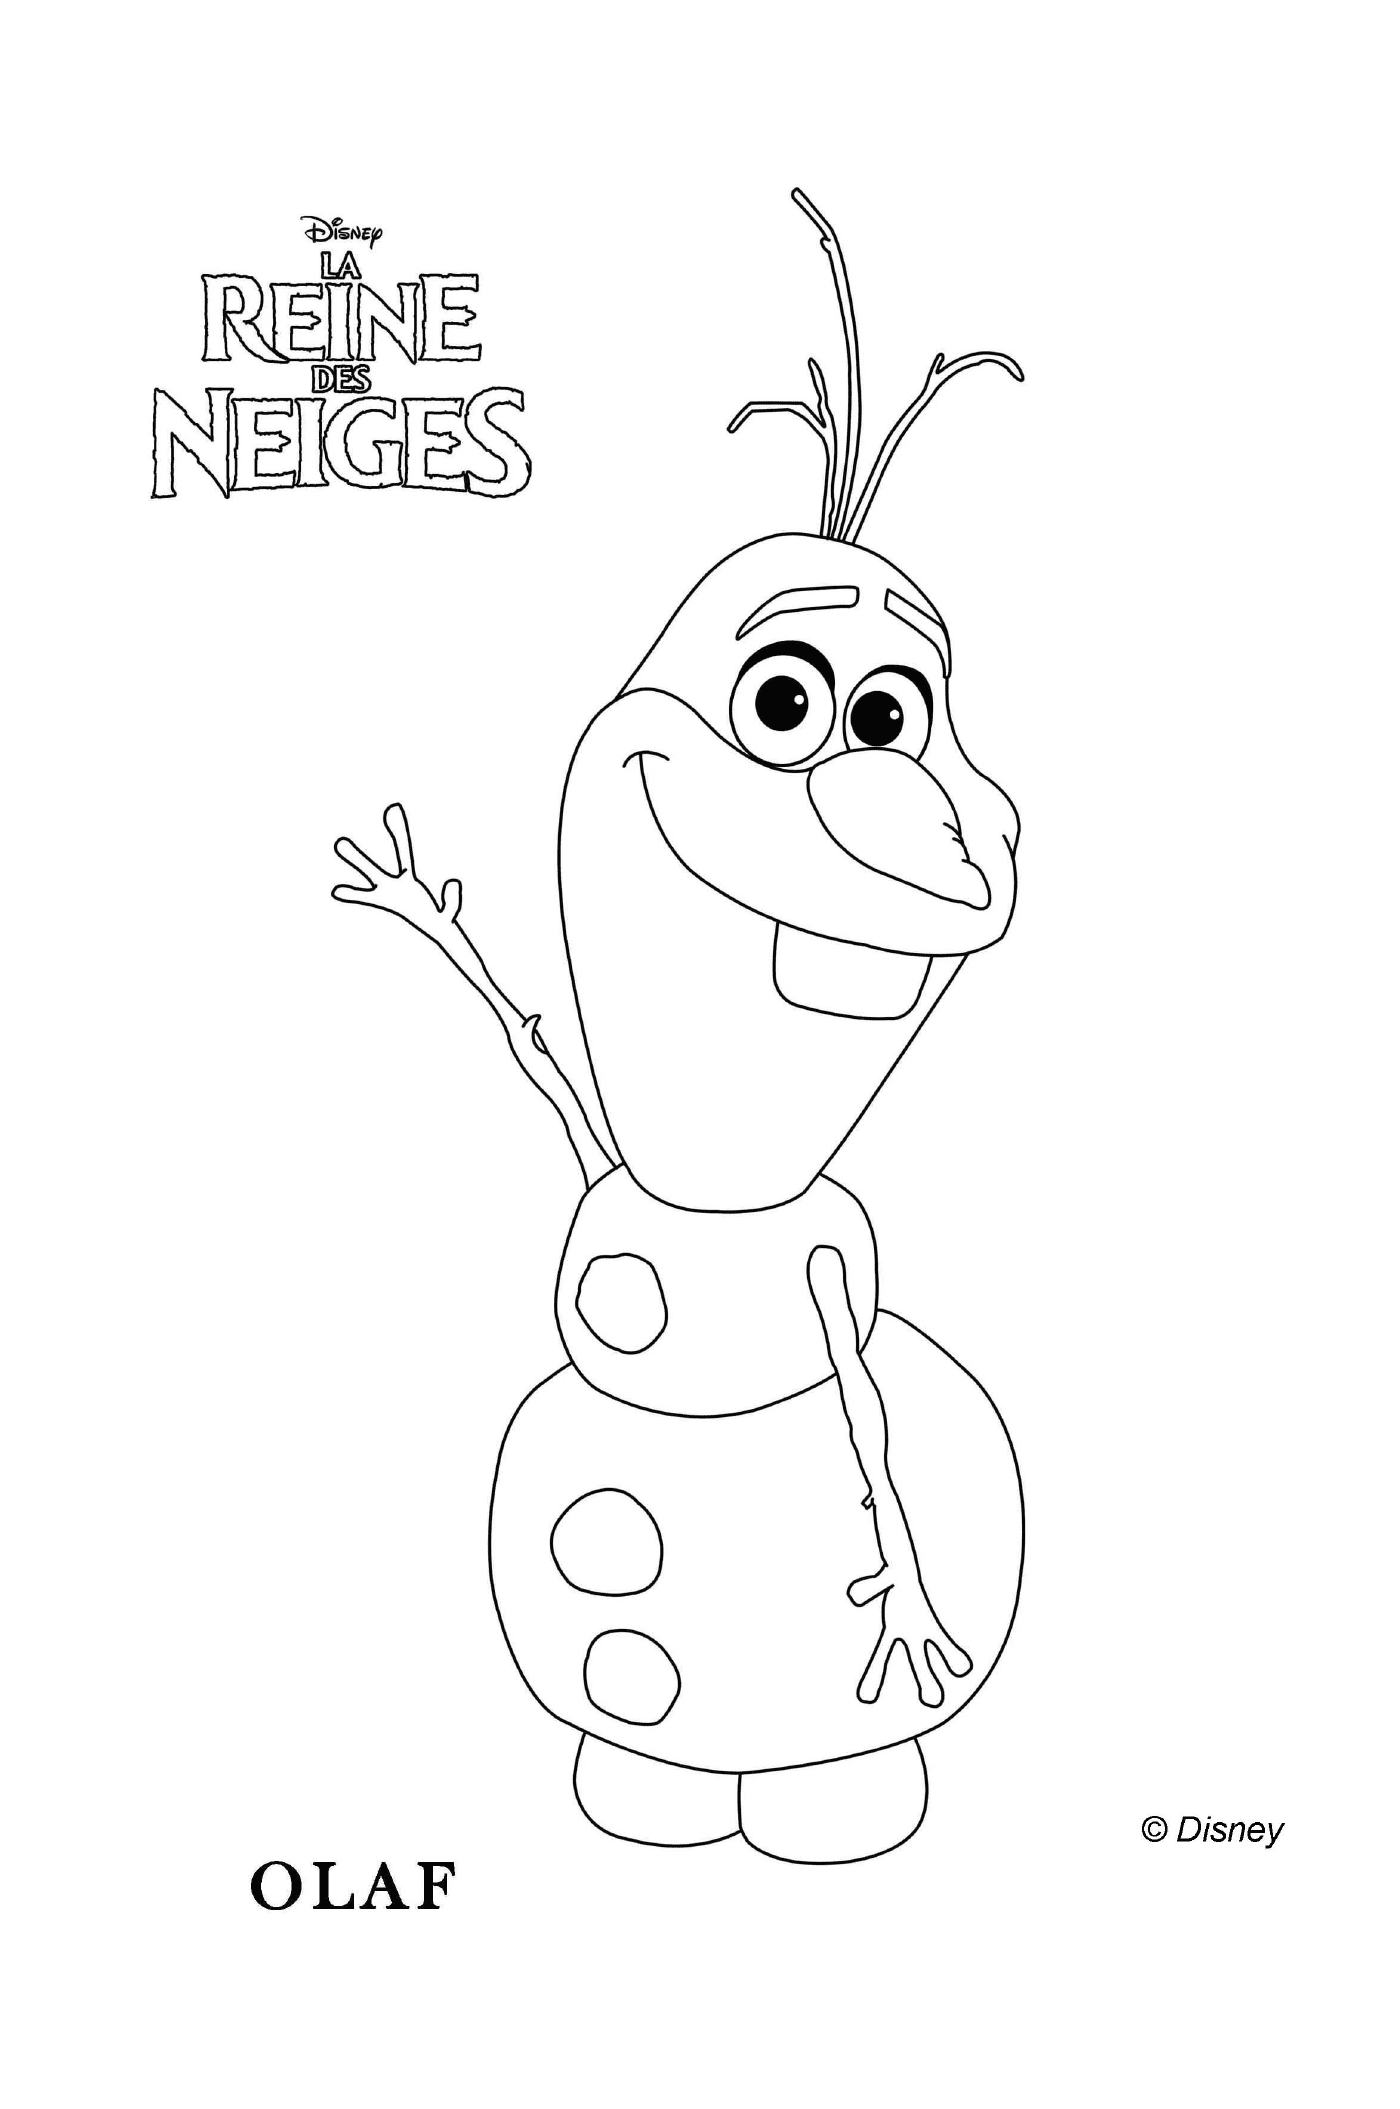  Olaf de Frozen makes a greeting 